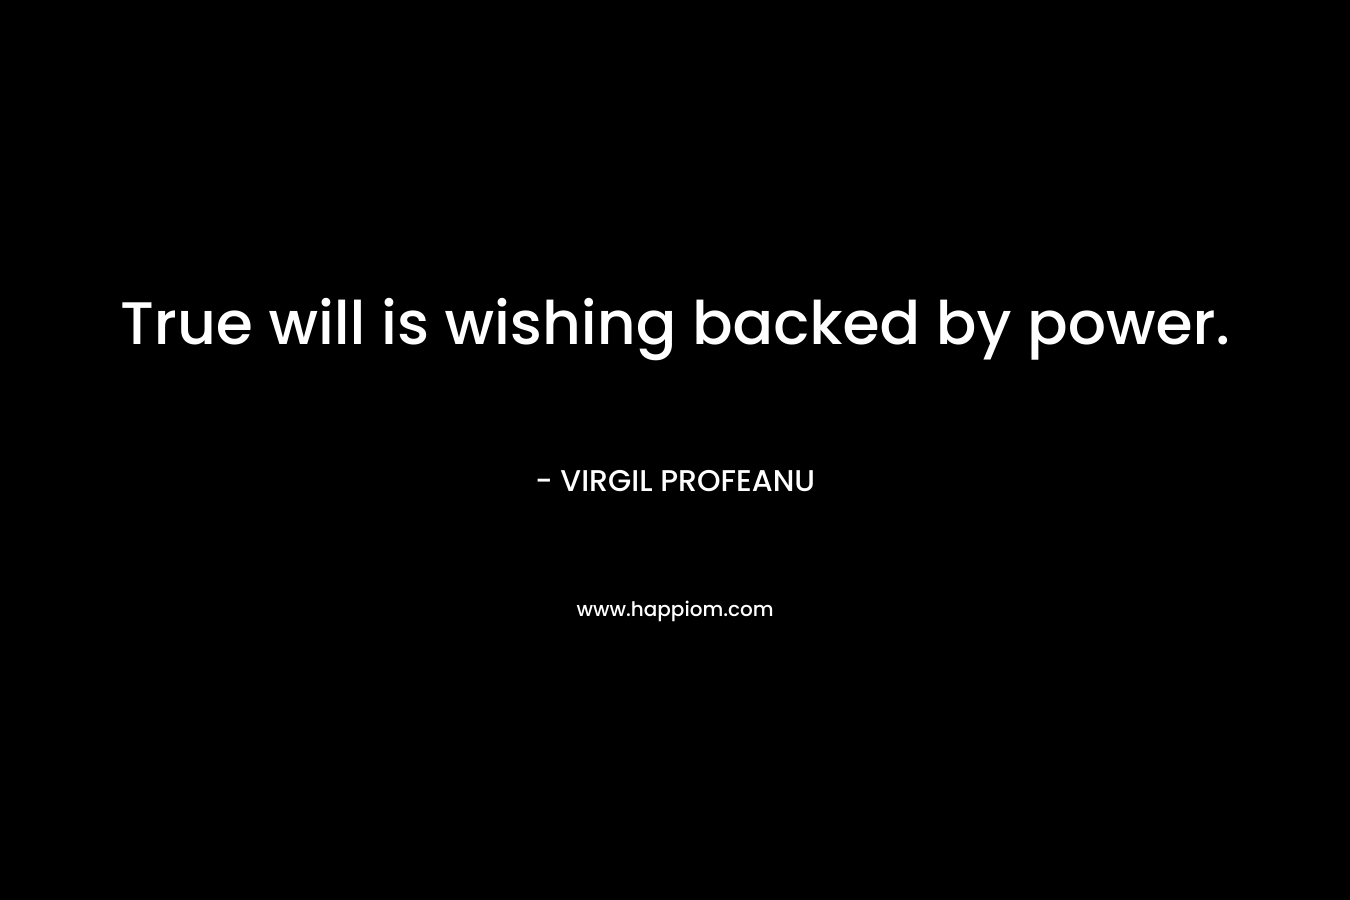 True will is wishing backed by power.